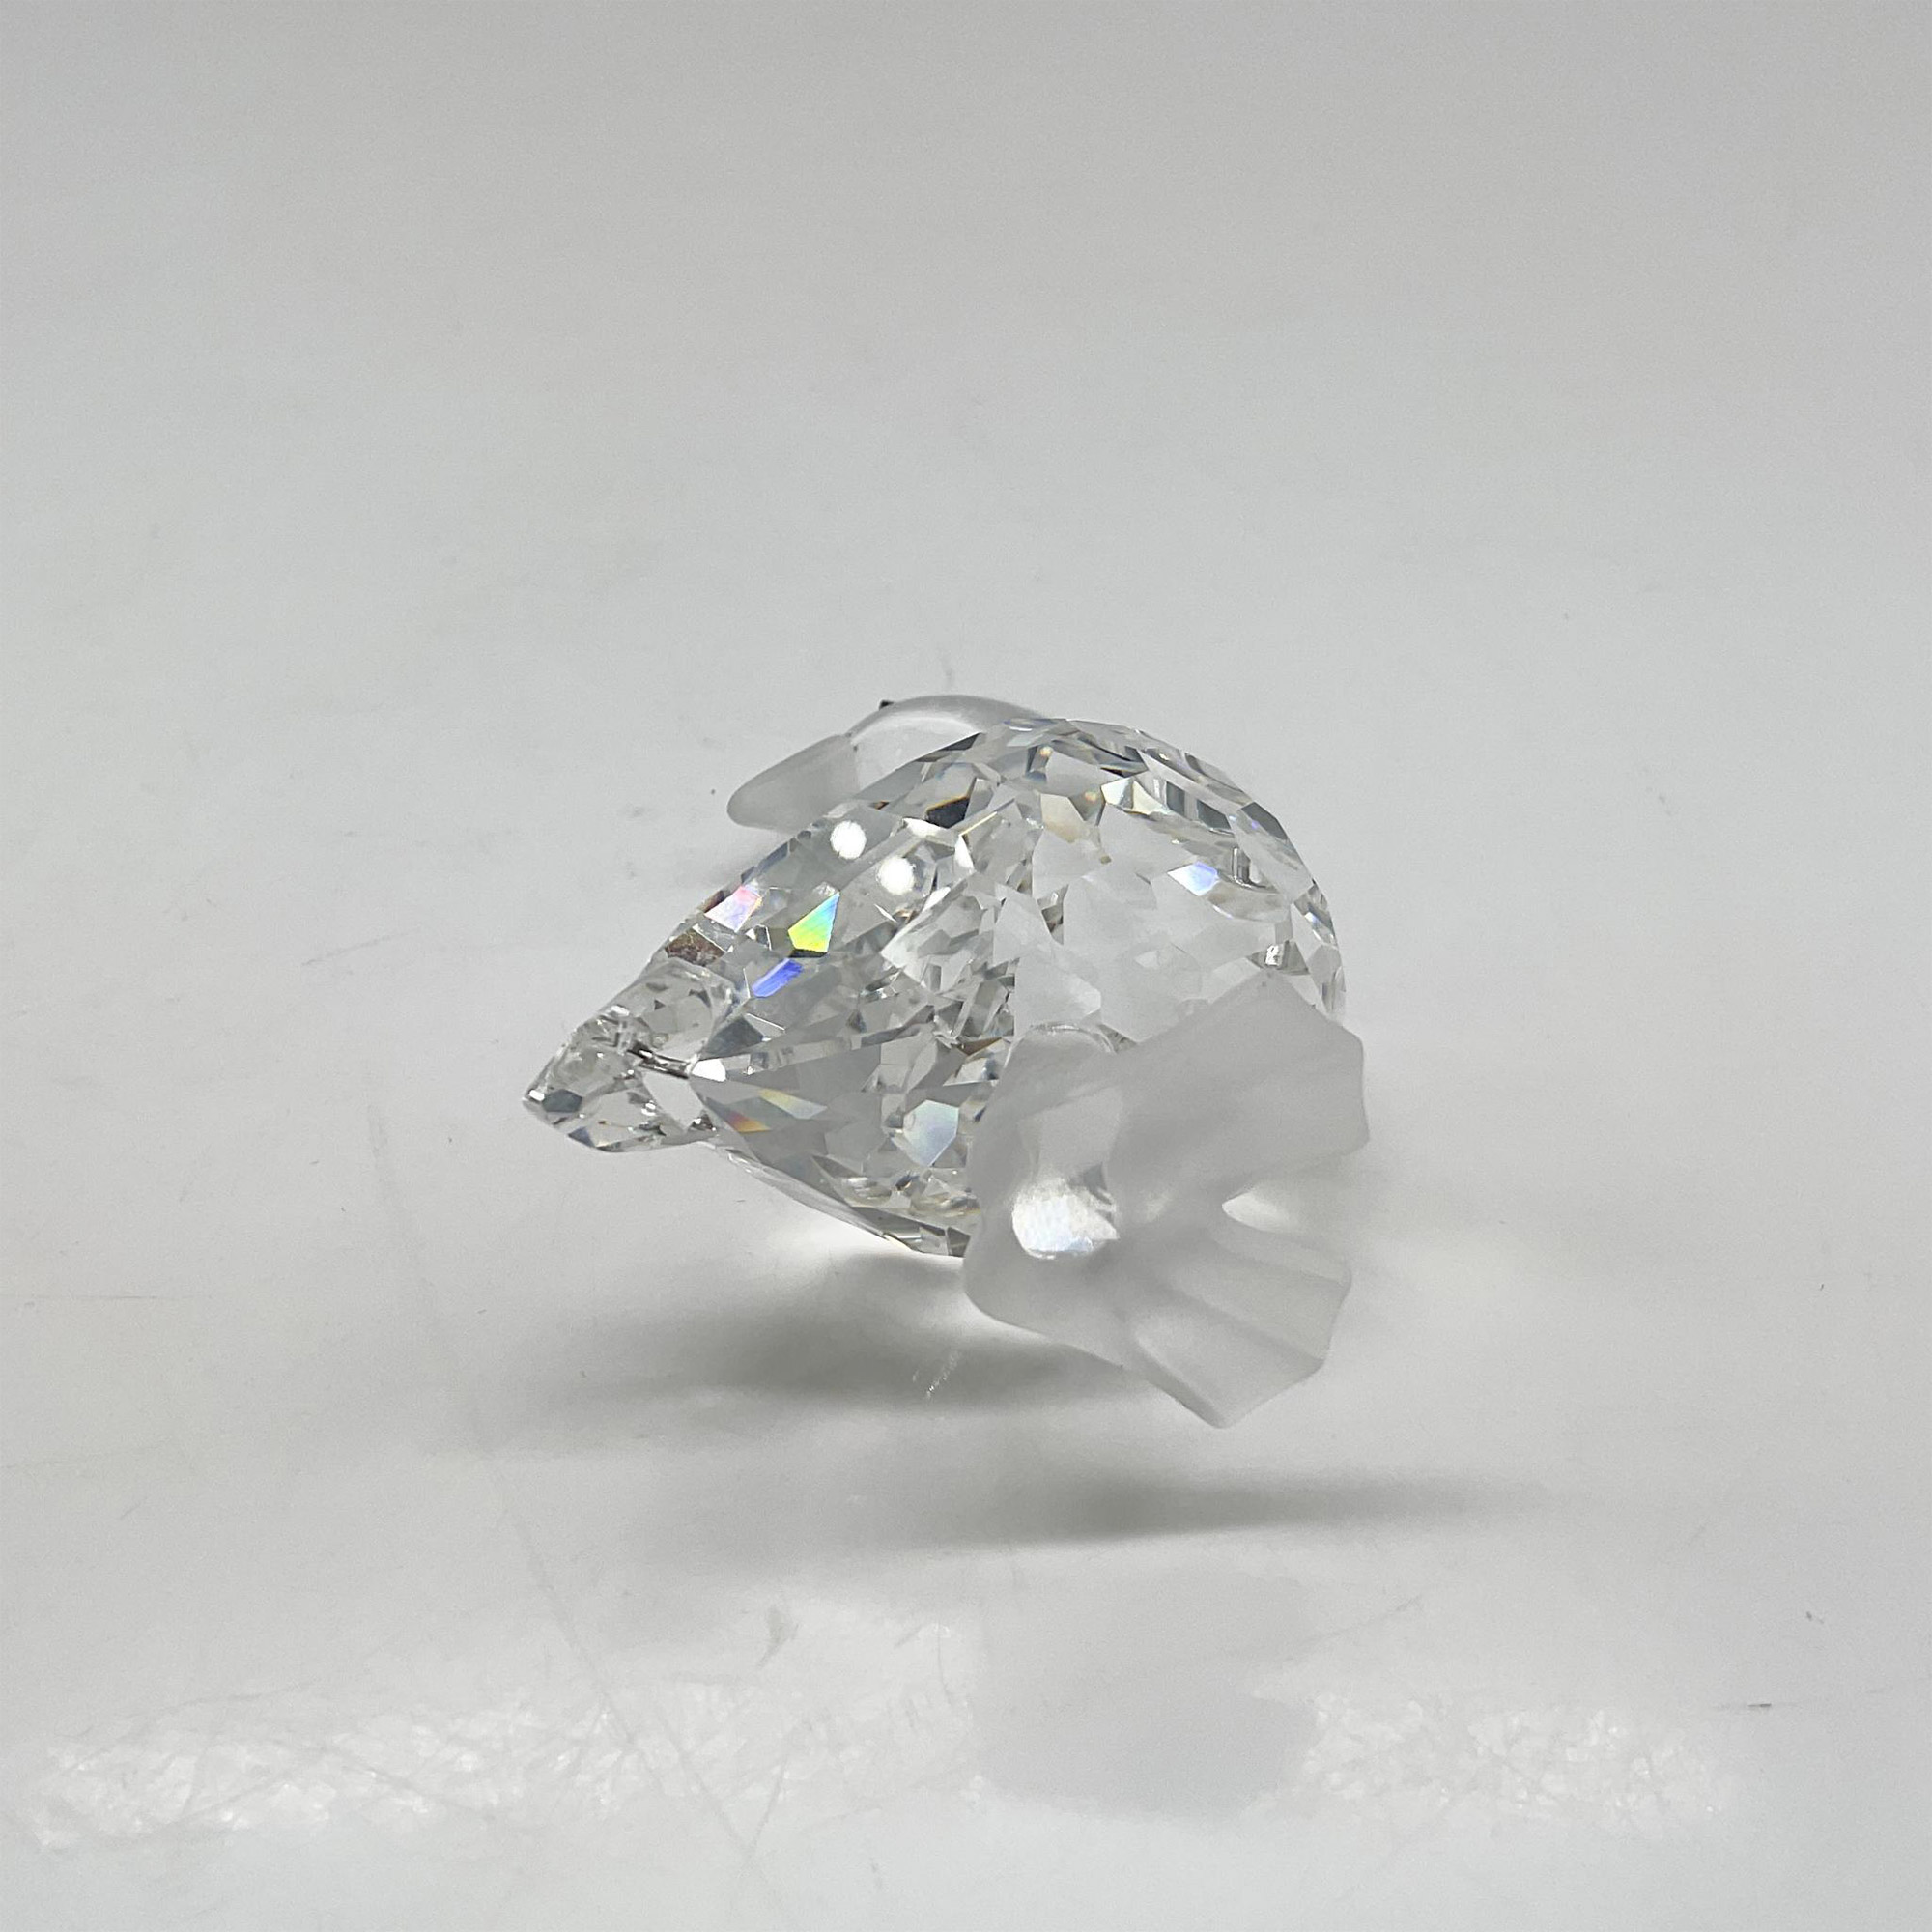 Swarovski Crystal Figurine, Goose Mother - Image 3 of 3